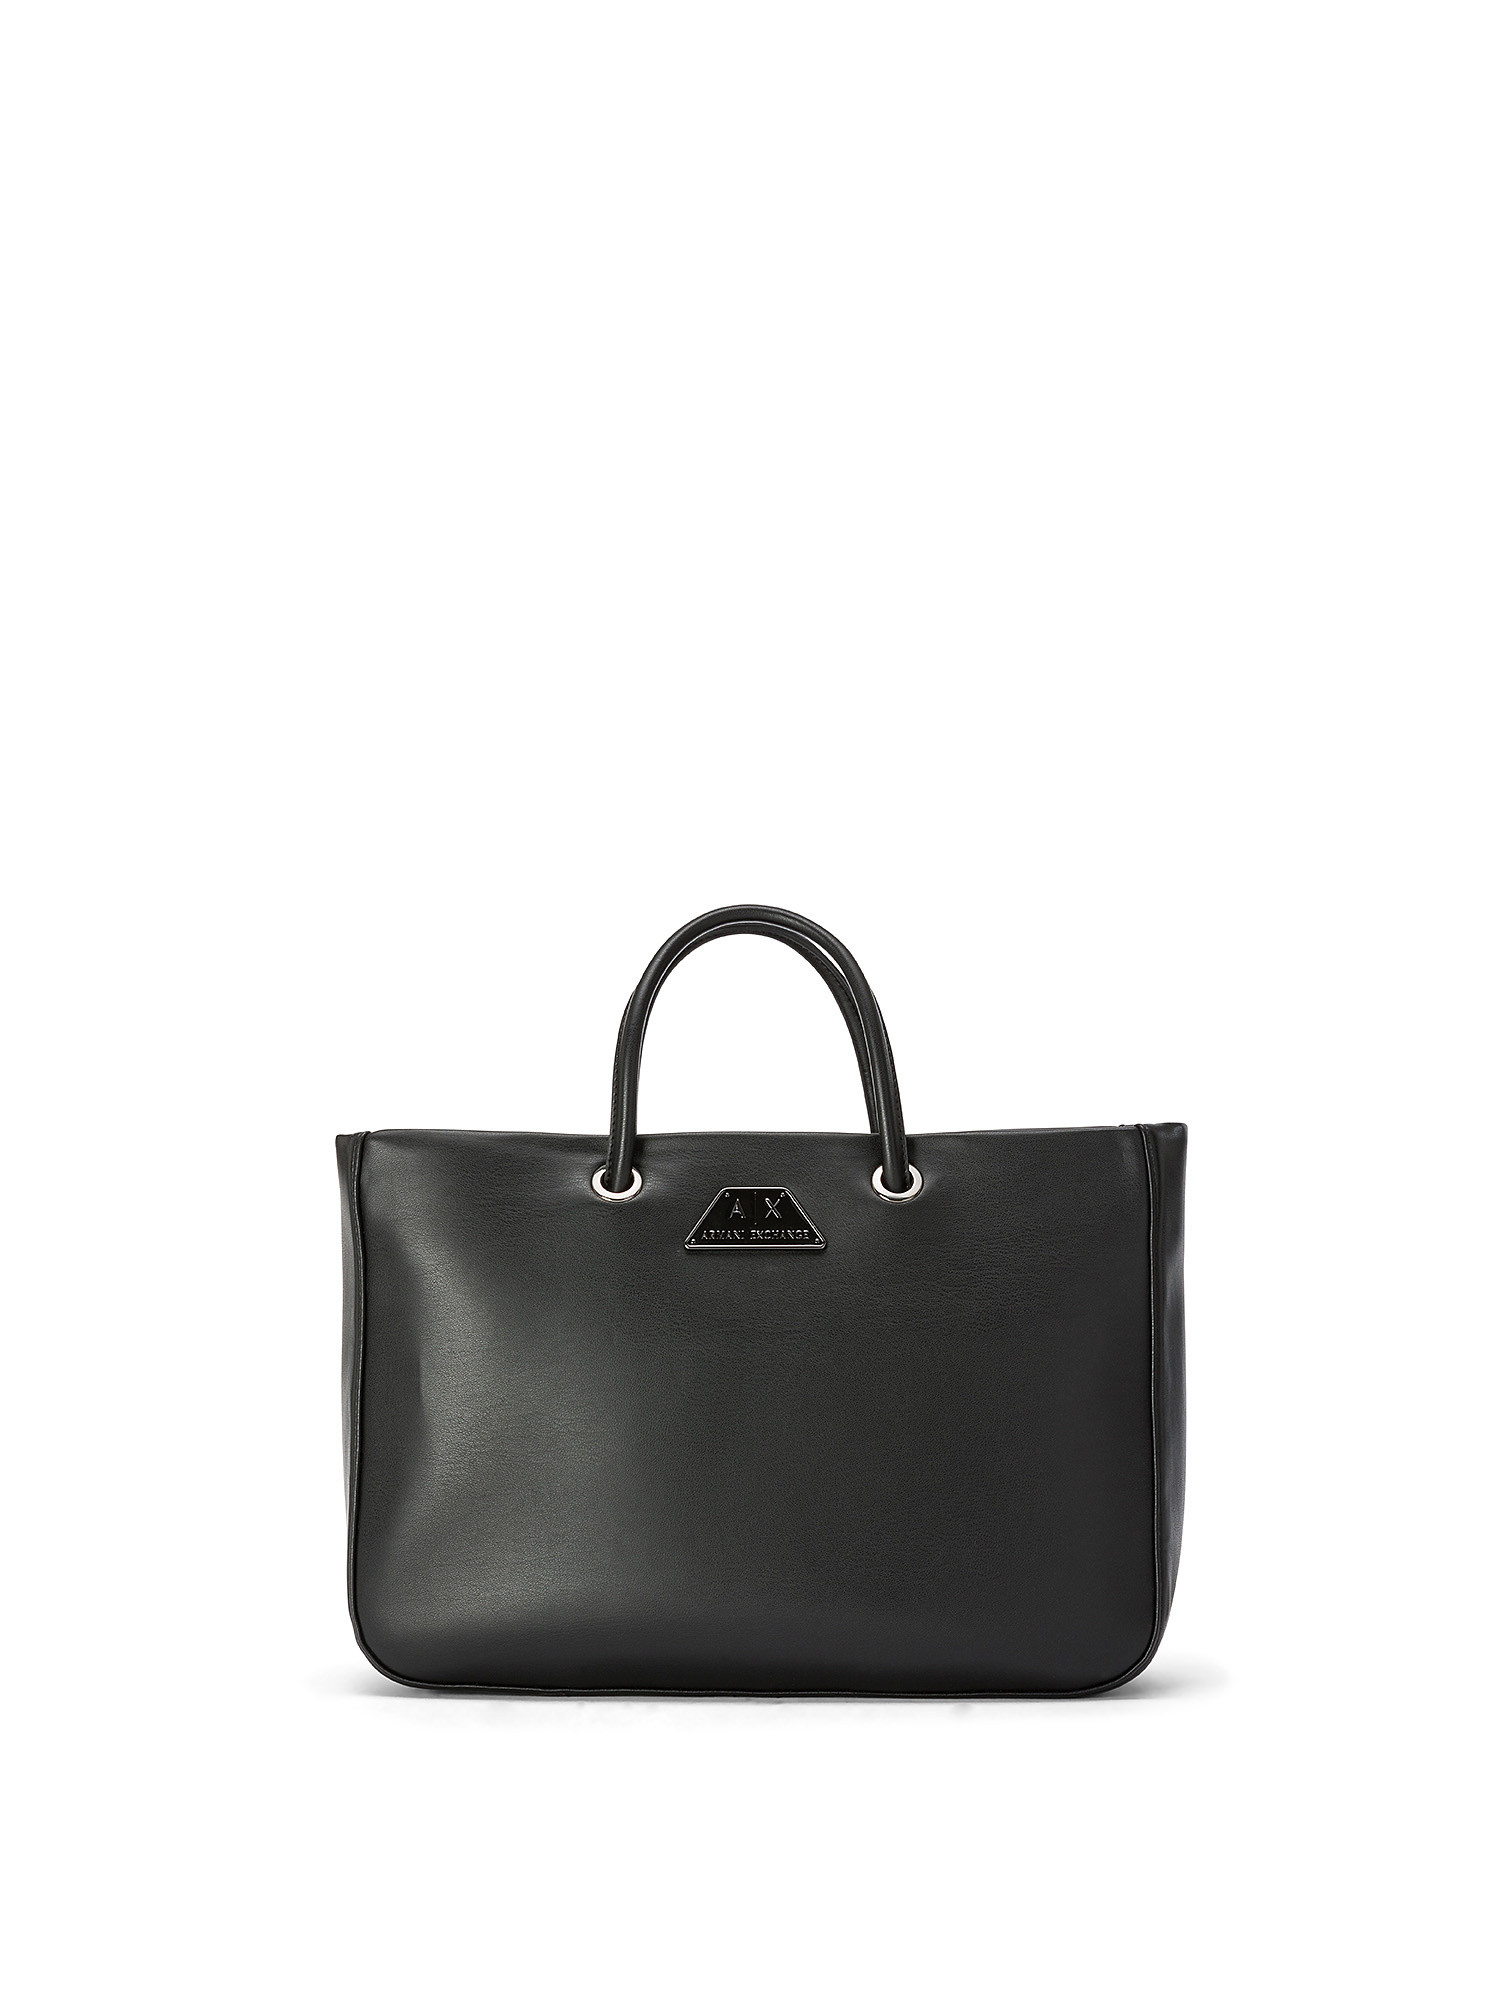 Armani Exchange - Handbag with logo, Black, large image number 0